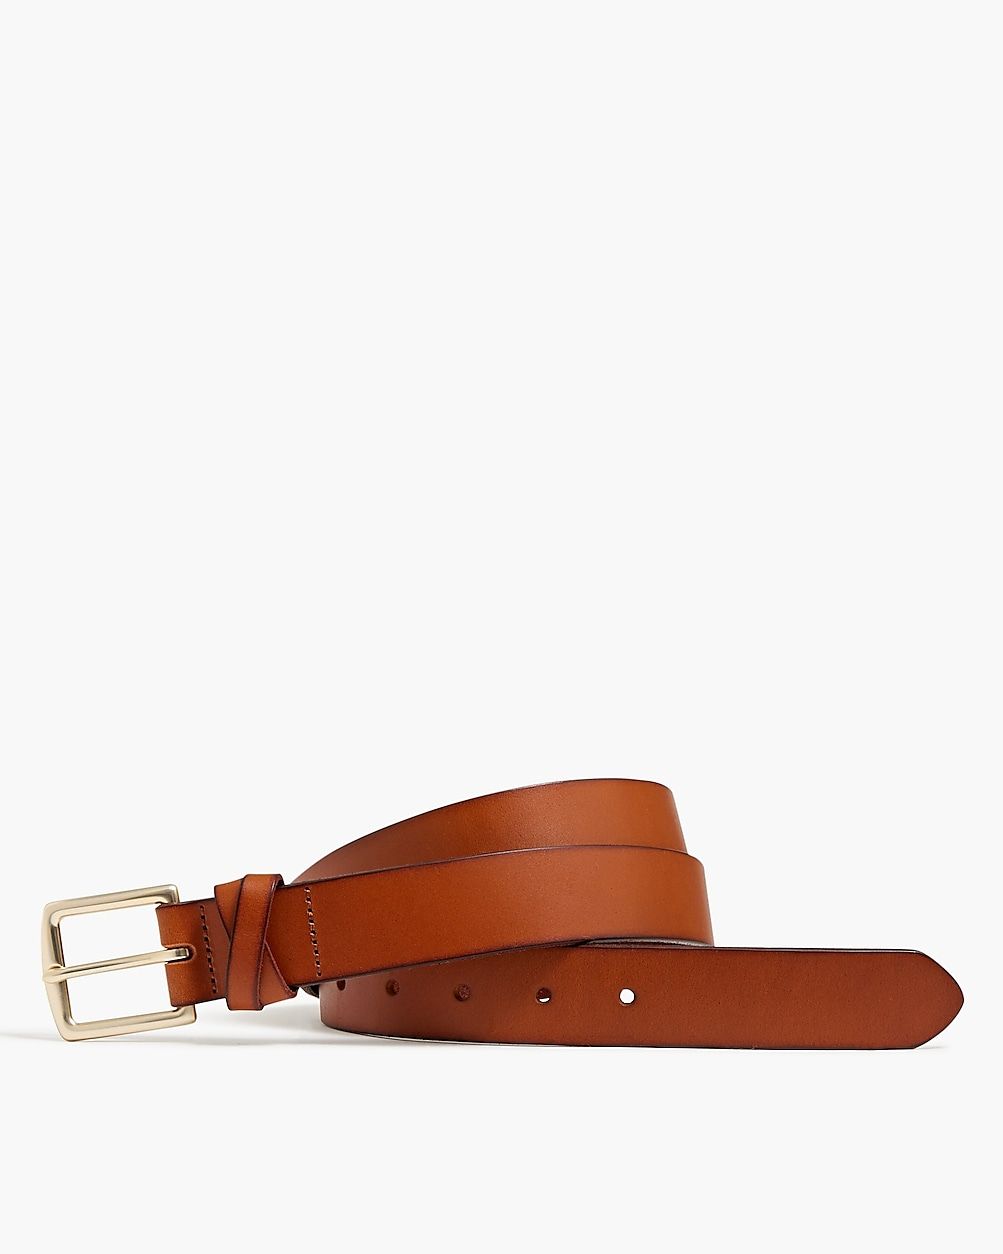 Crisscross leather belt | J.Crew Factory